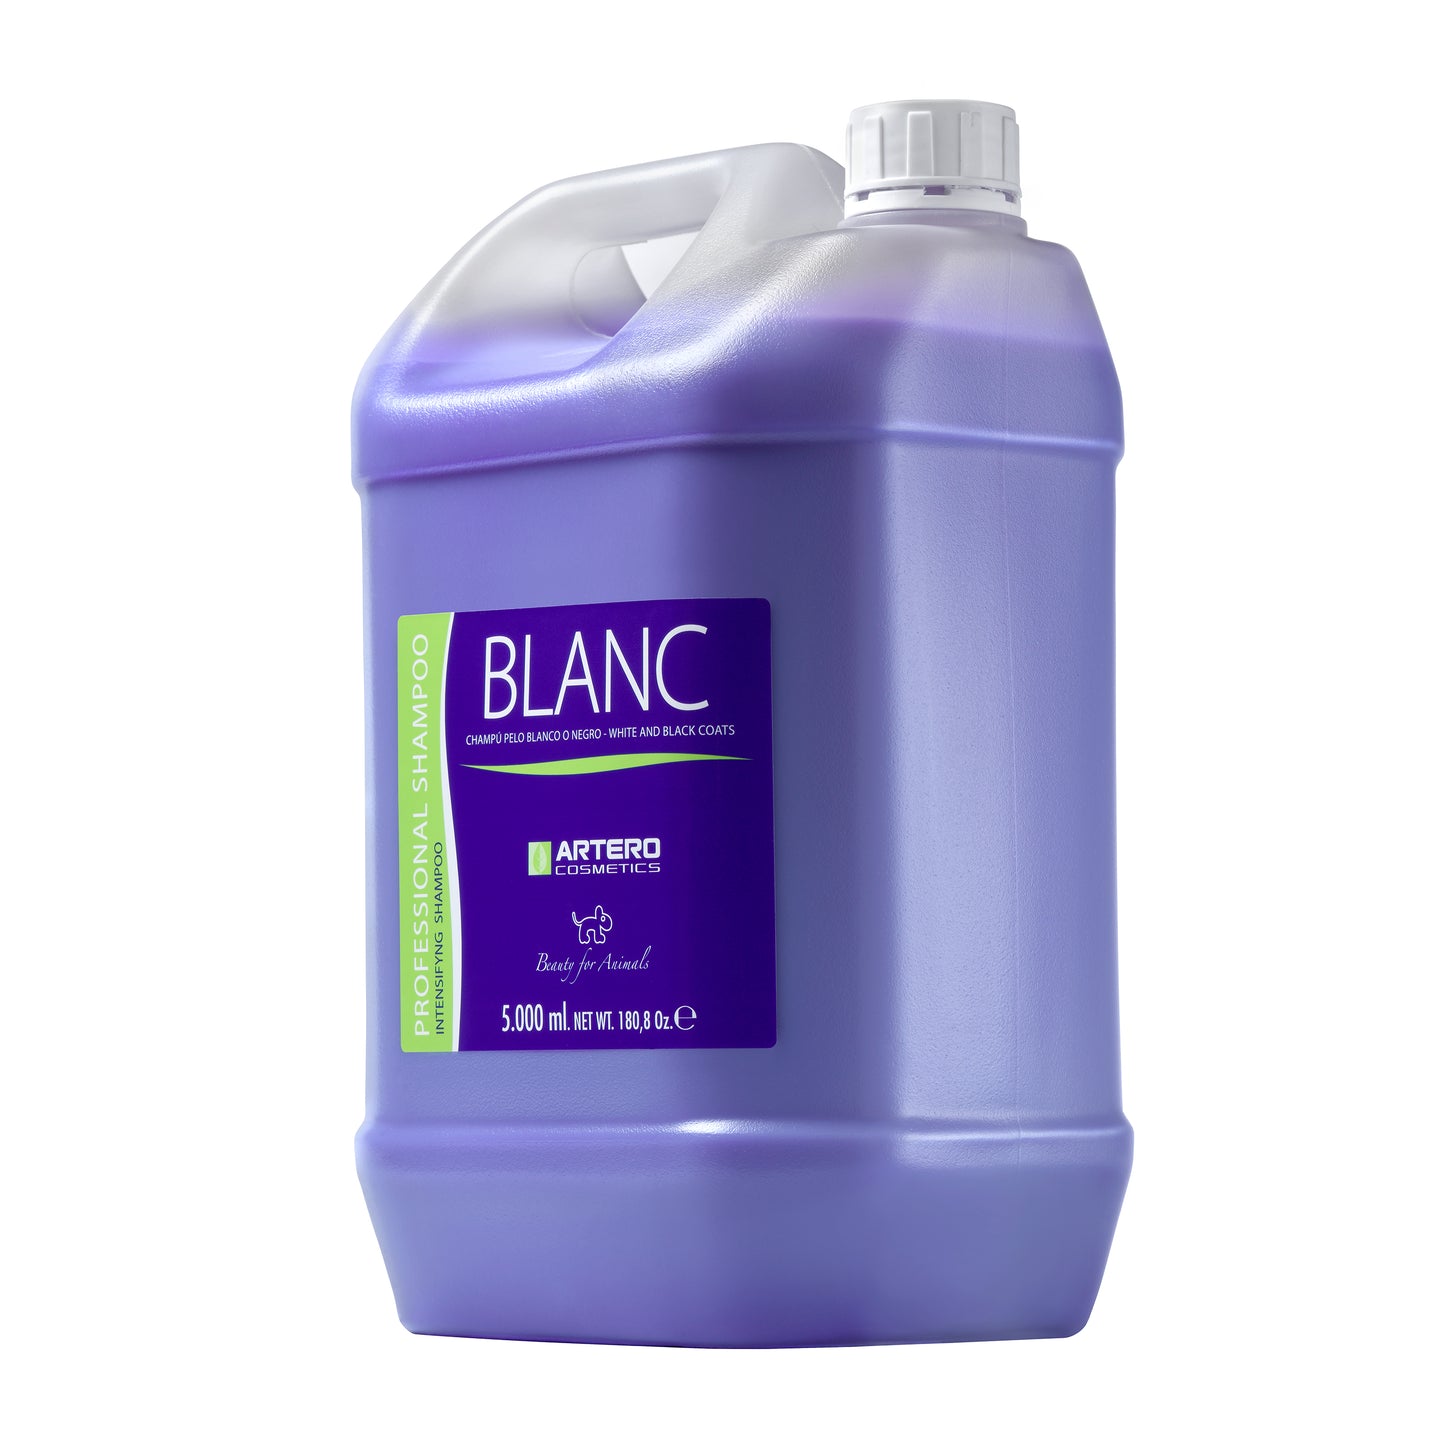 Blanc Shampoo (2 Sizes)